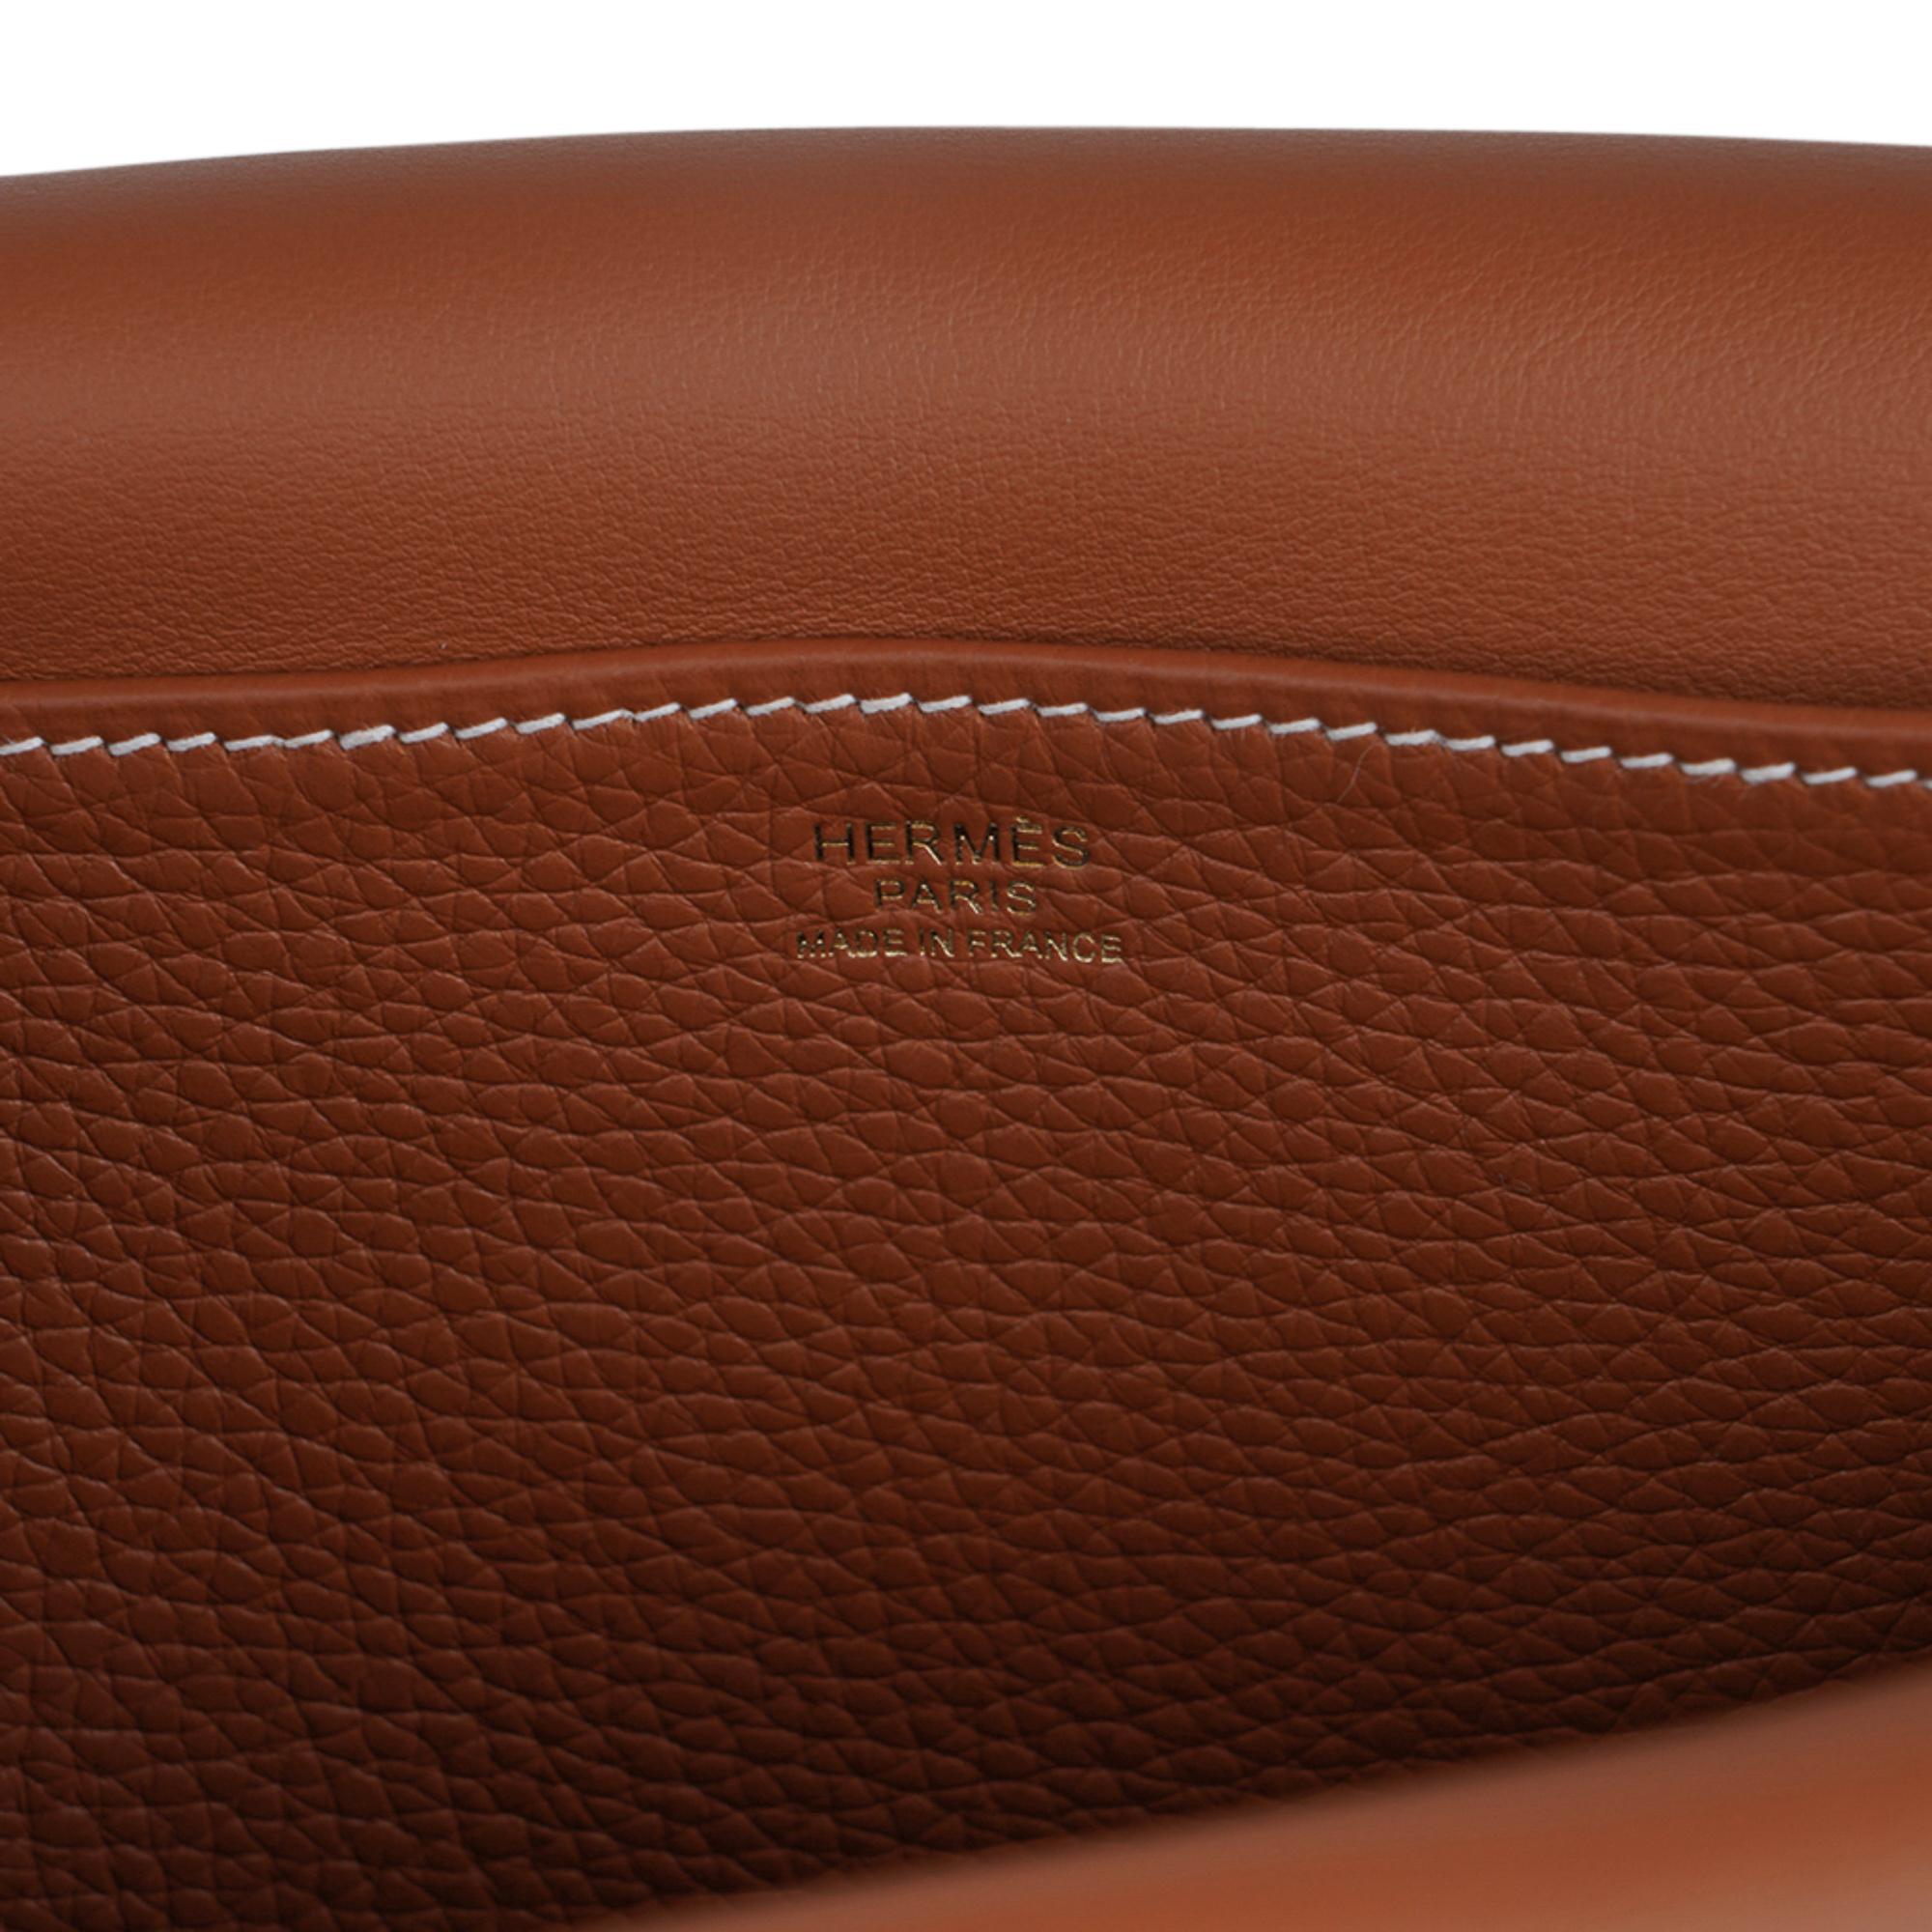 Hermes Halzan 25 Bag Gold w / Gold Hardware Clemence Leather New w/Box 1